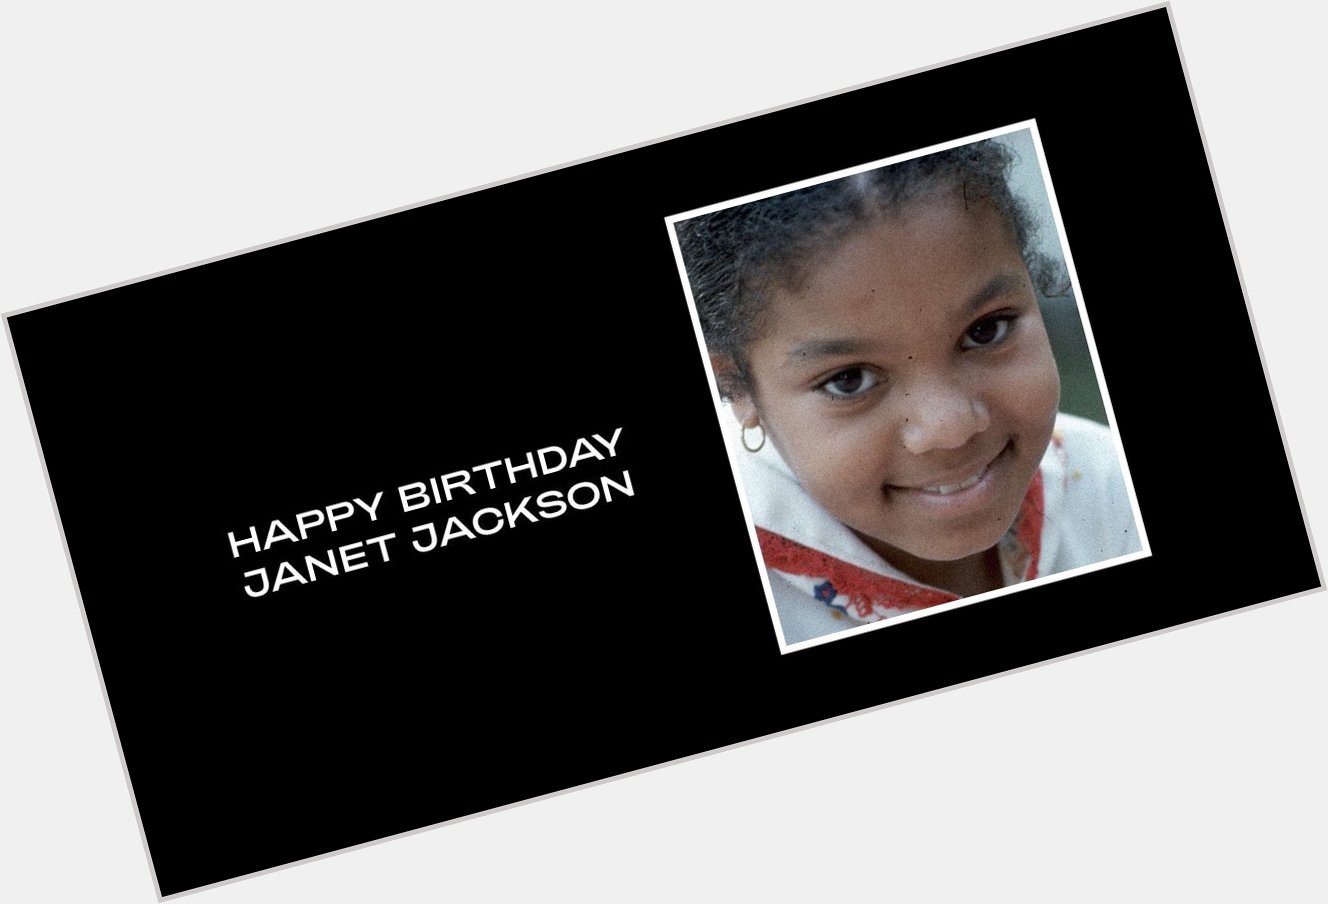 Beyoncé wishes Janet Jackson a happy birthday via her website   